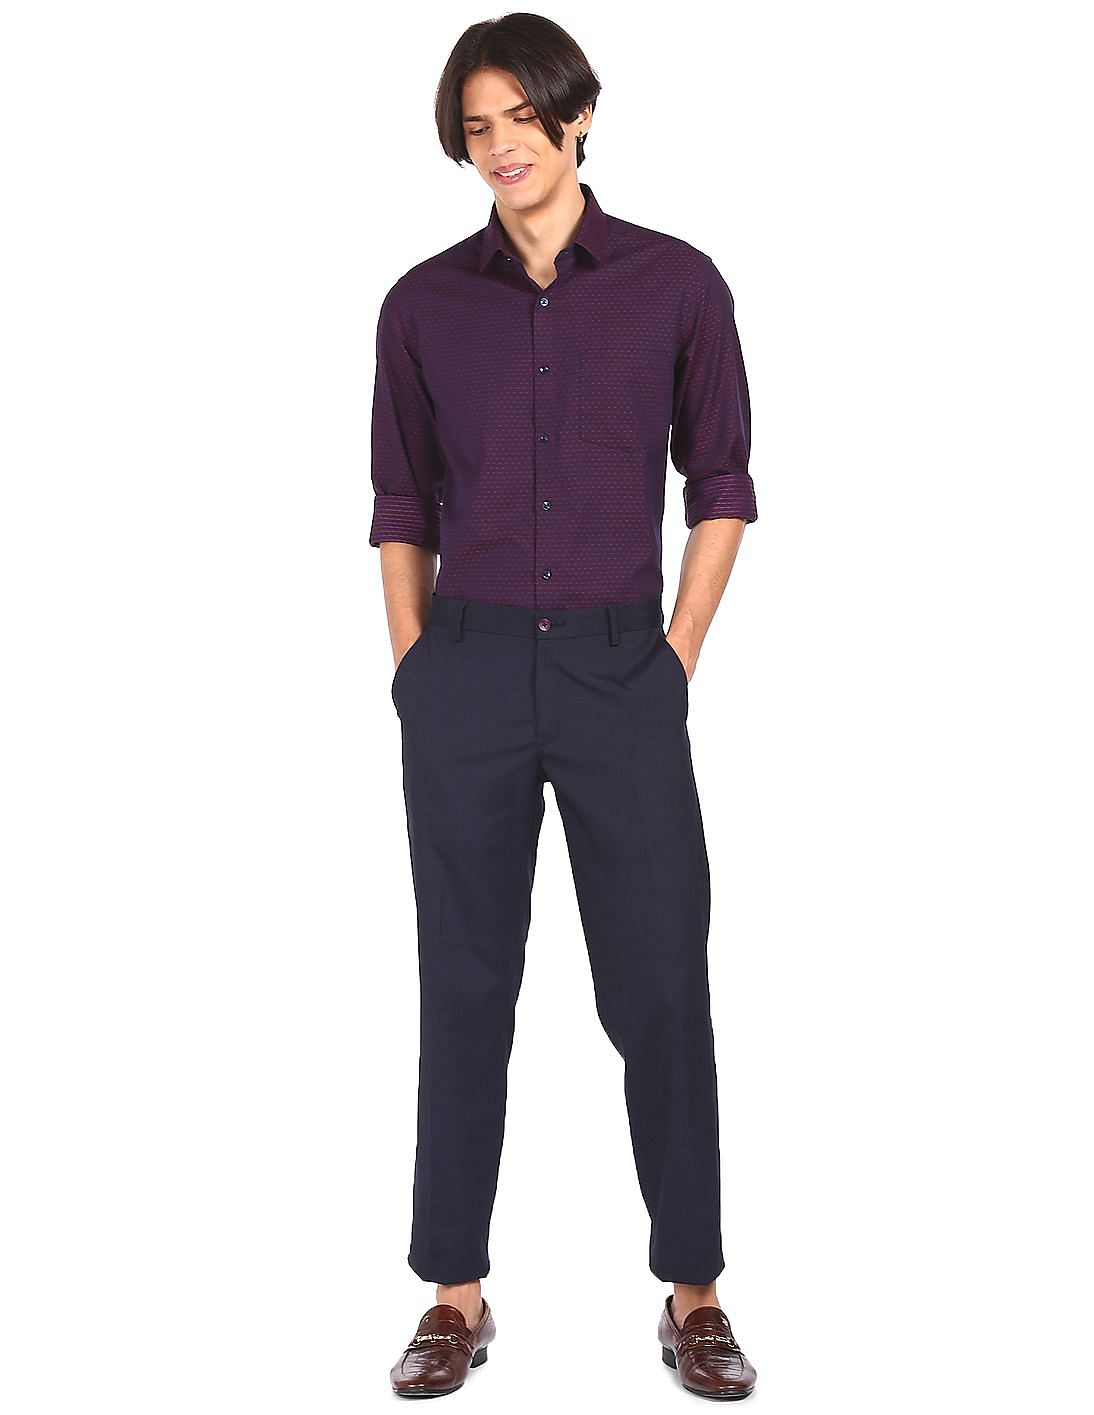 Capreze Dress Pants for Women High Waist Office Work Pant with Pockets  Casual Straight Leg Slacks Business Trousers Purple S - Walmart.com